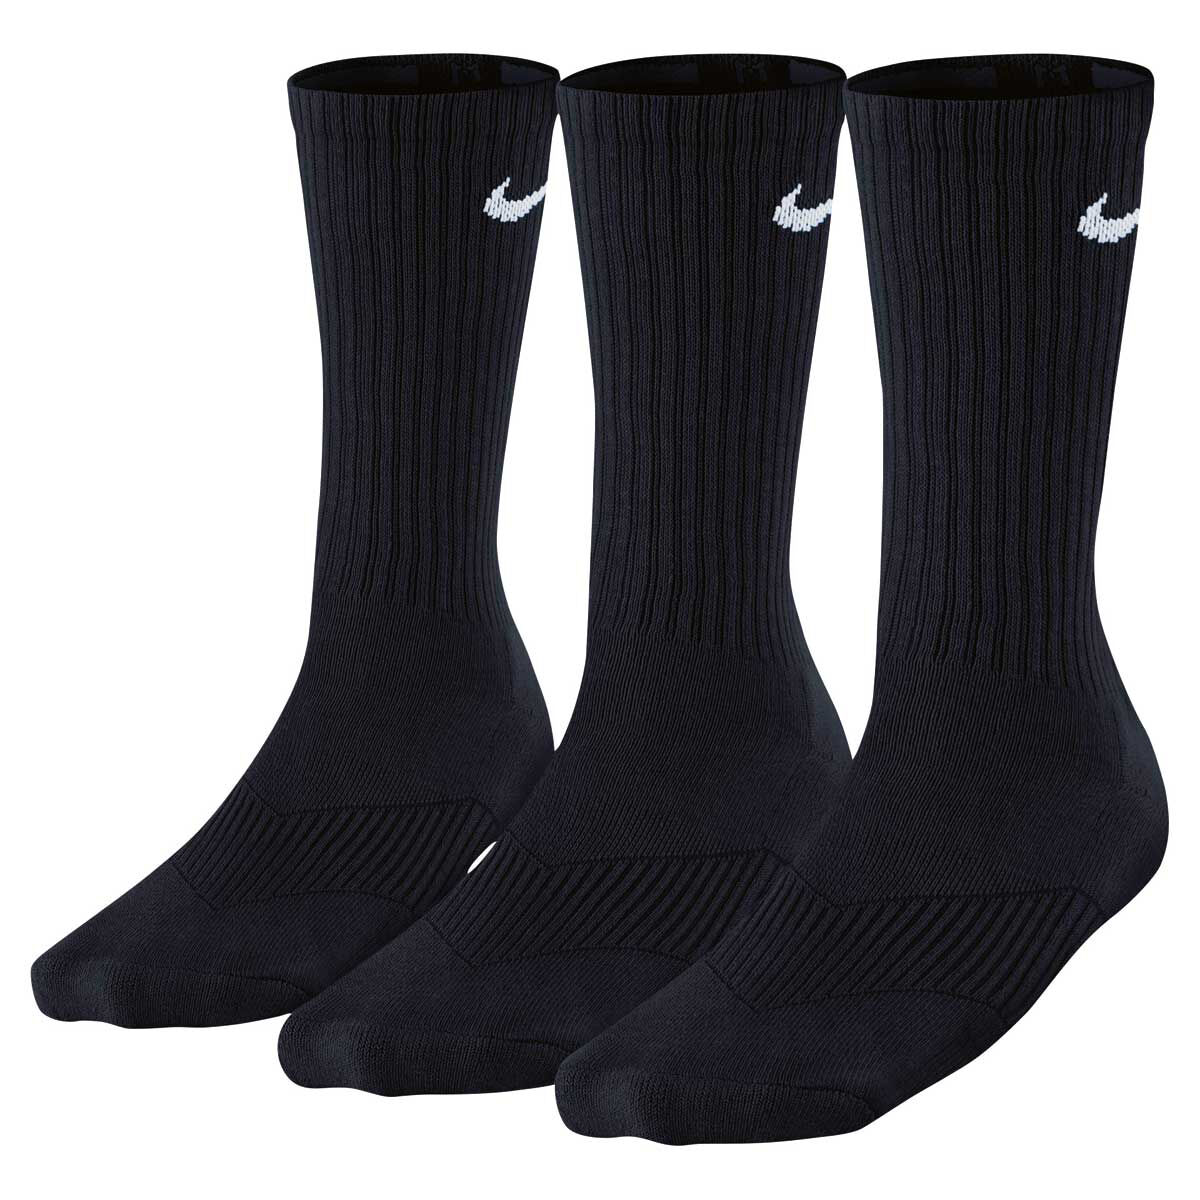 nike socks long black